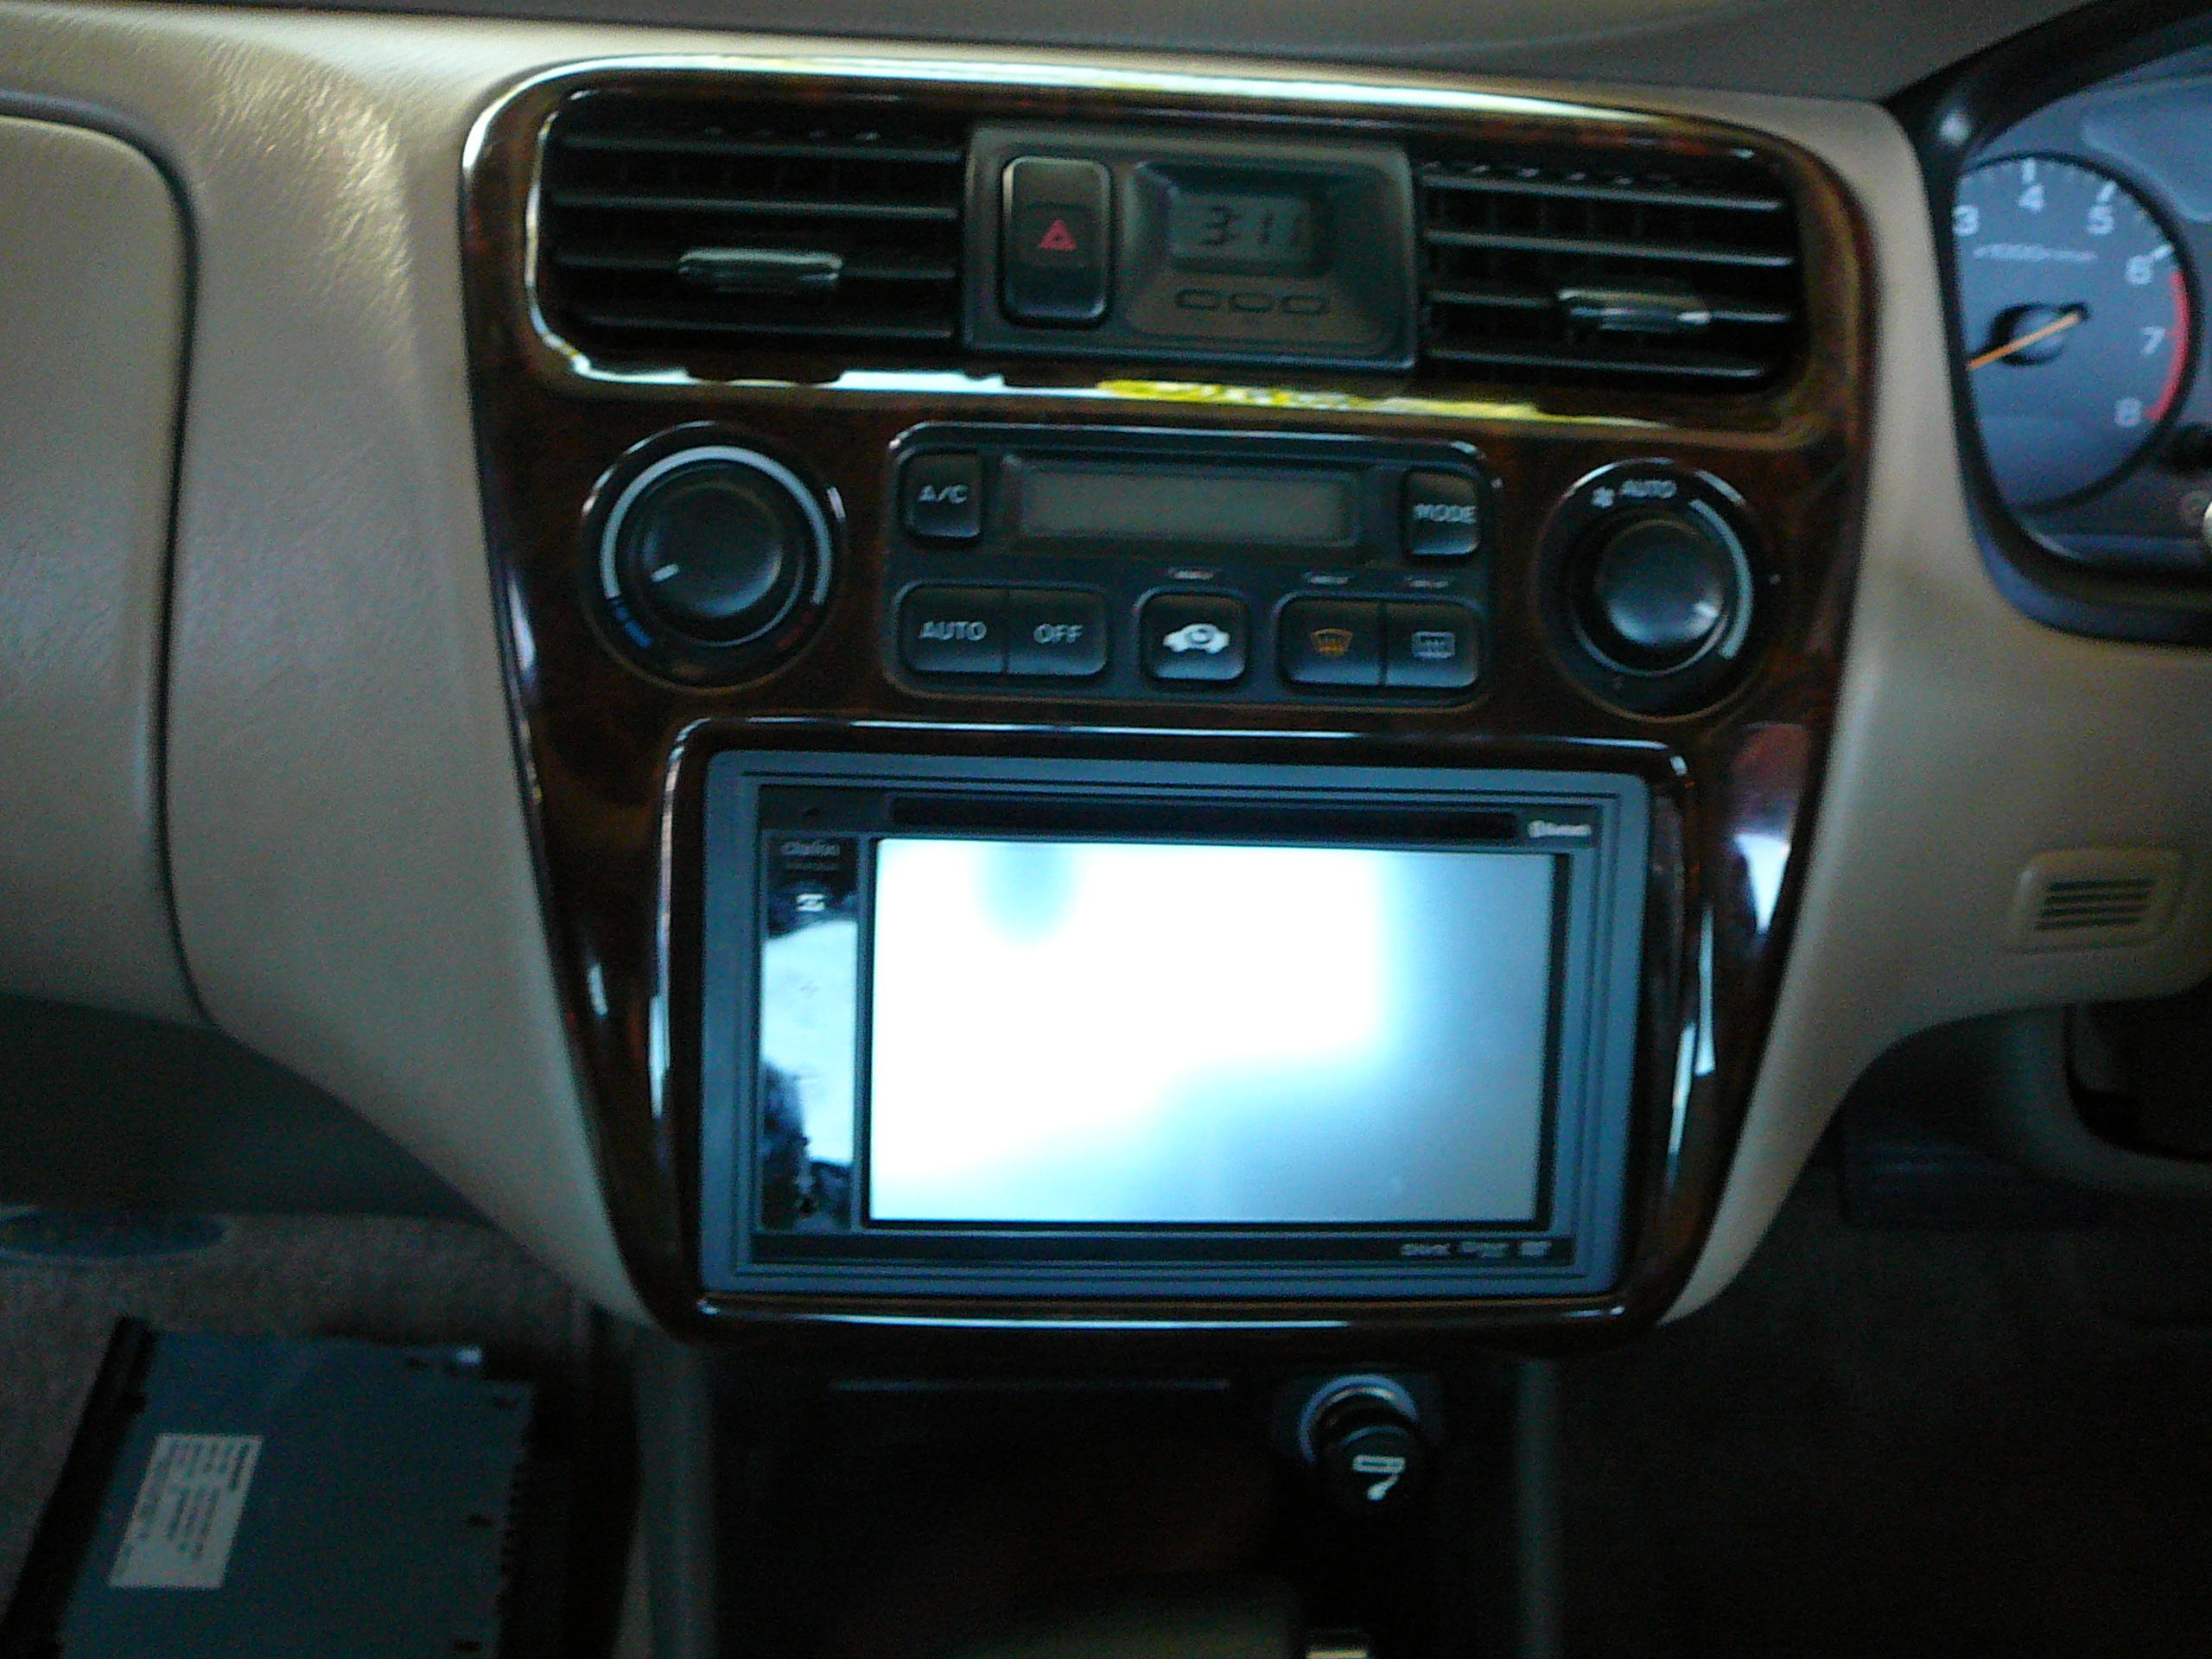 Honda Accord 2000, Clarion NX502A GPS Navigation System